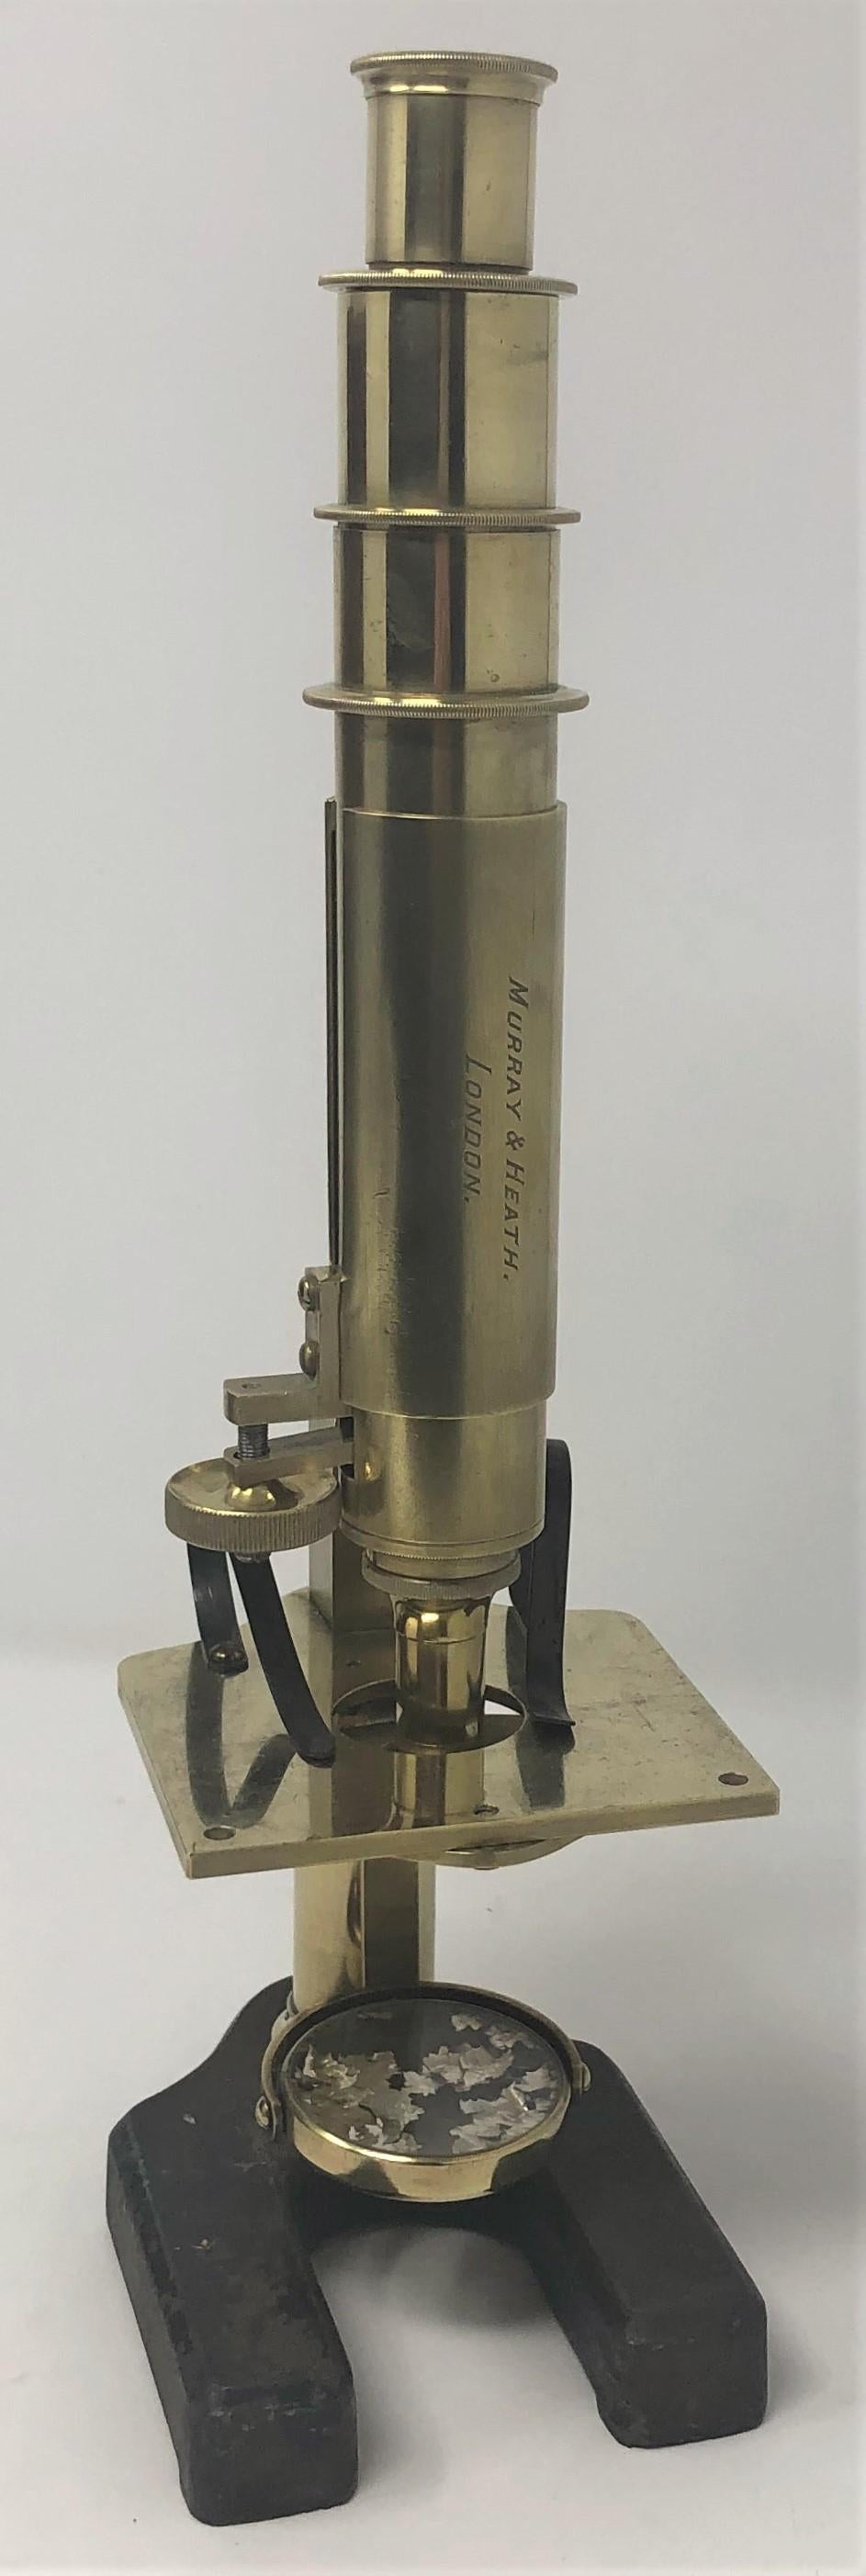 Antique English brass monocular microscope in original case signed R & J Beck London, circa 1890-1900.